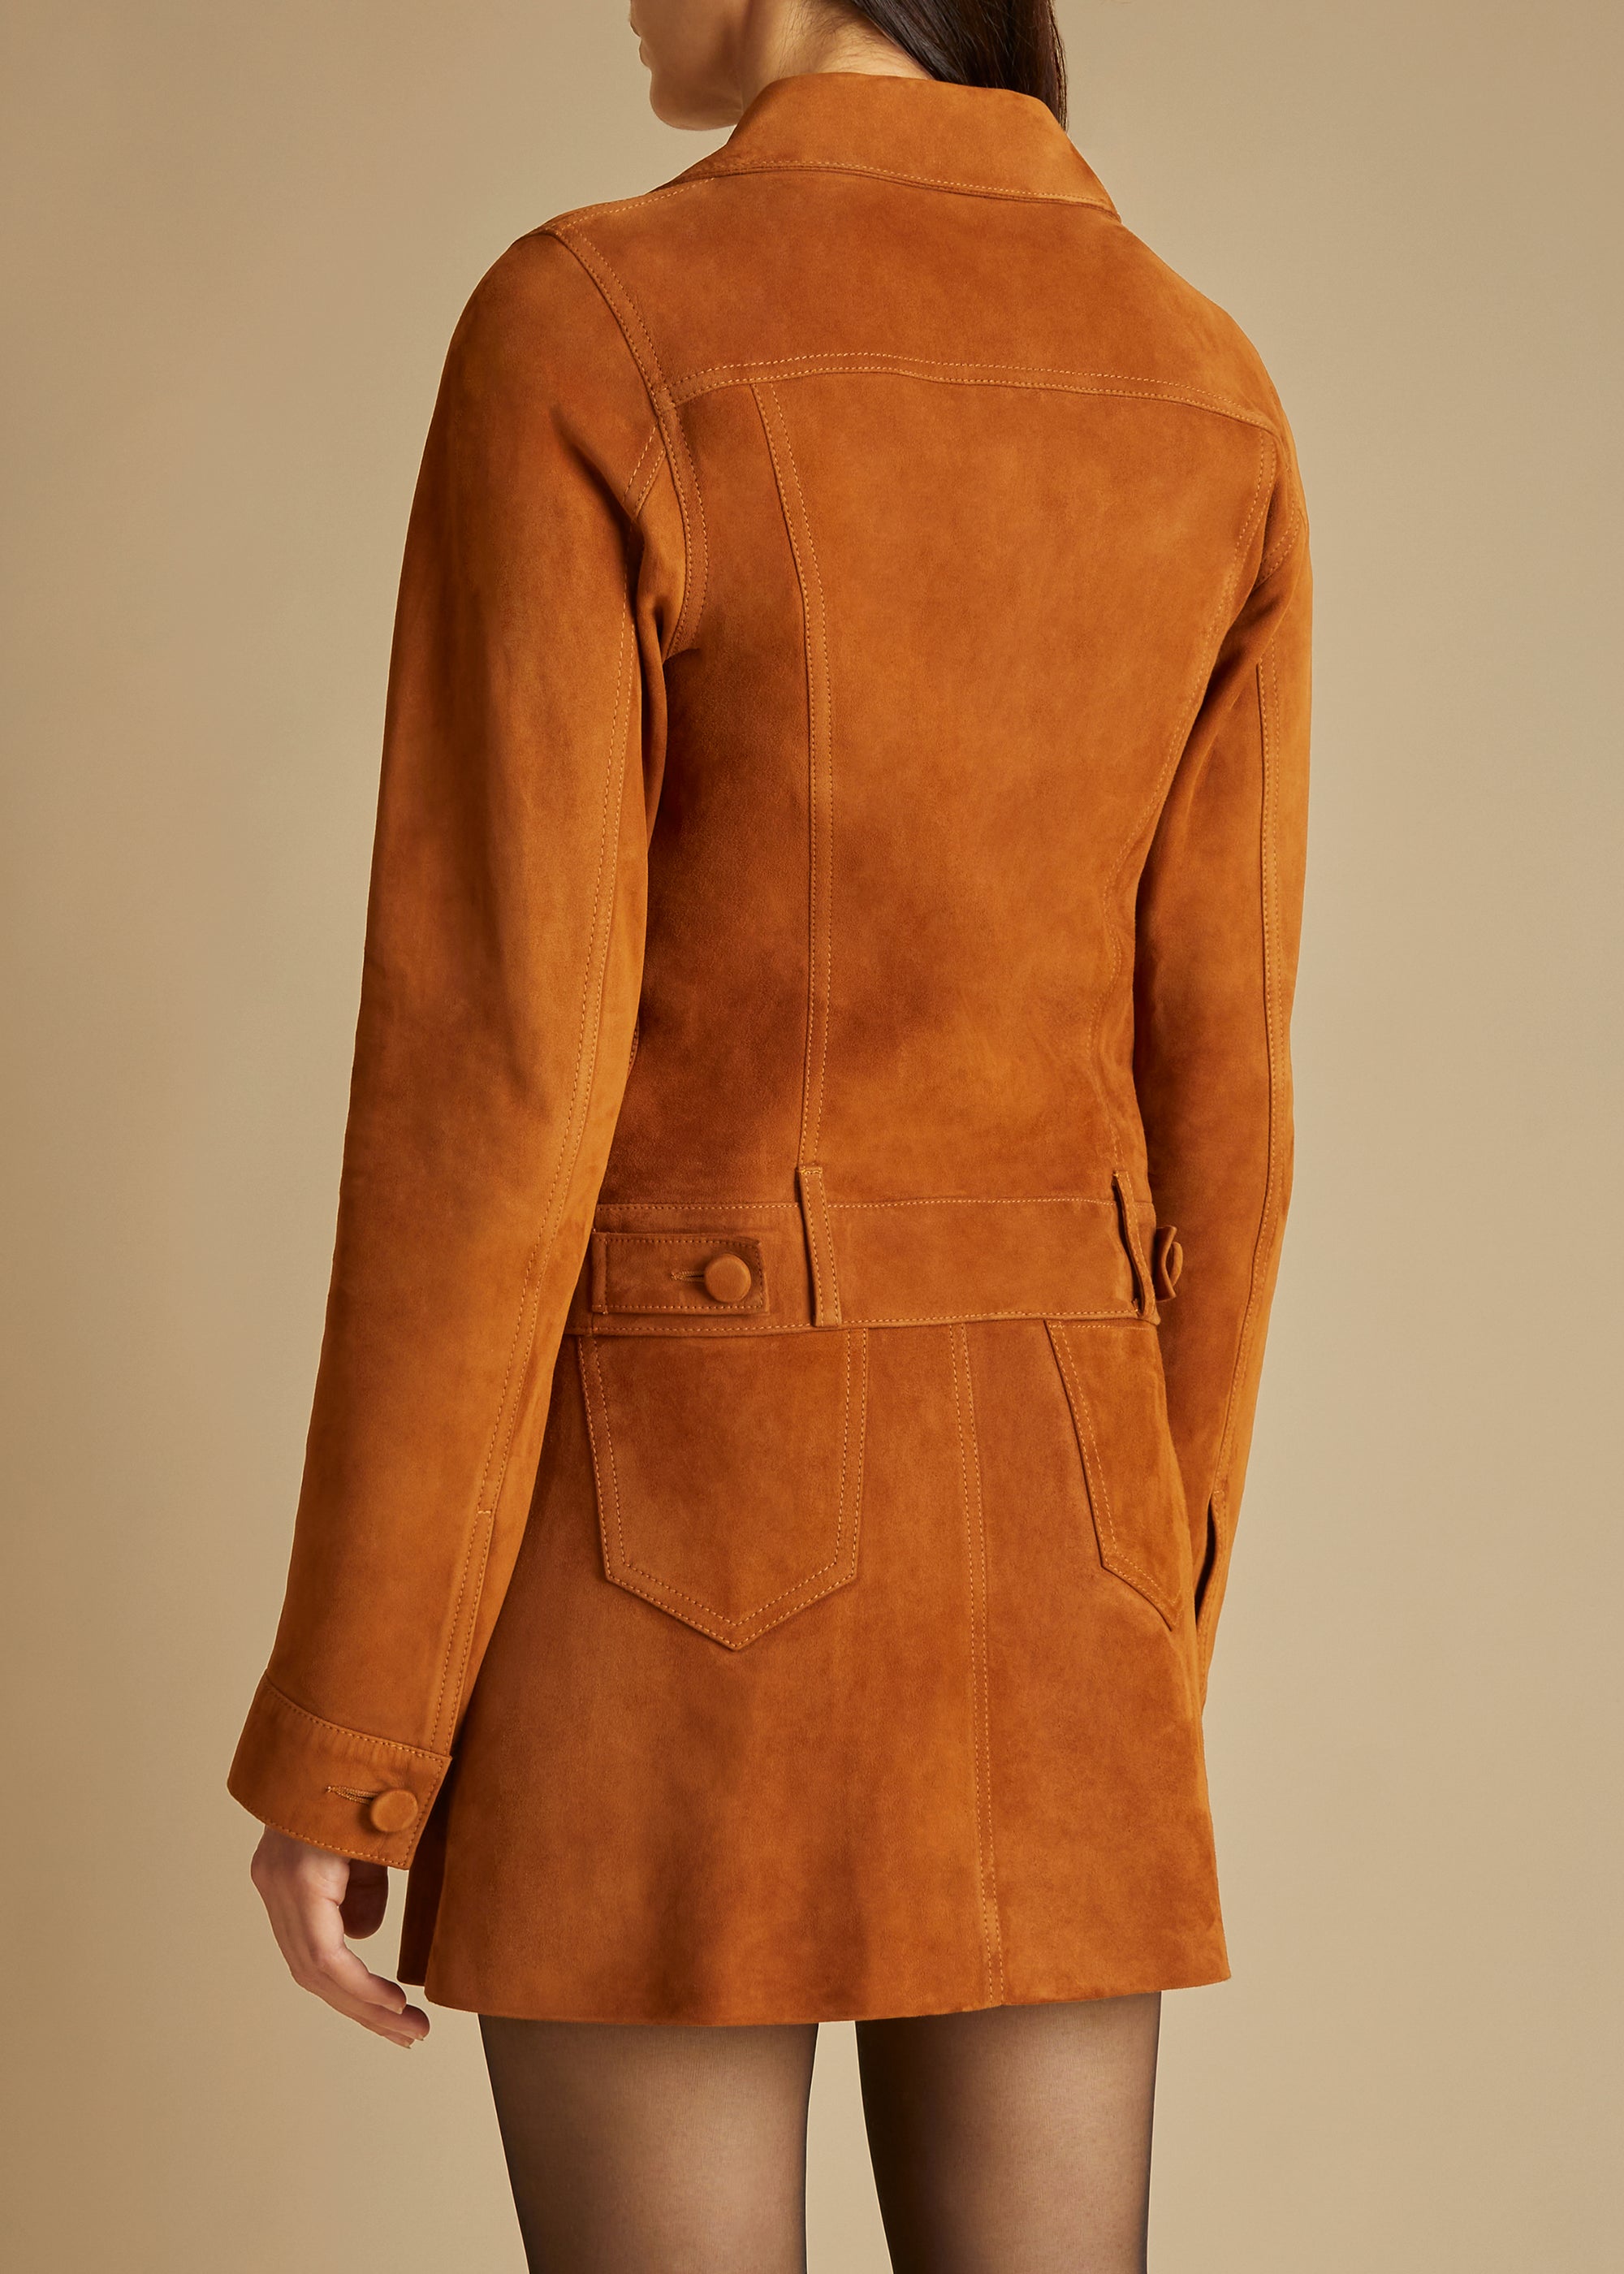 Richard jacket in leather - Chestnut